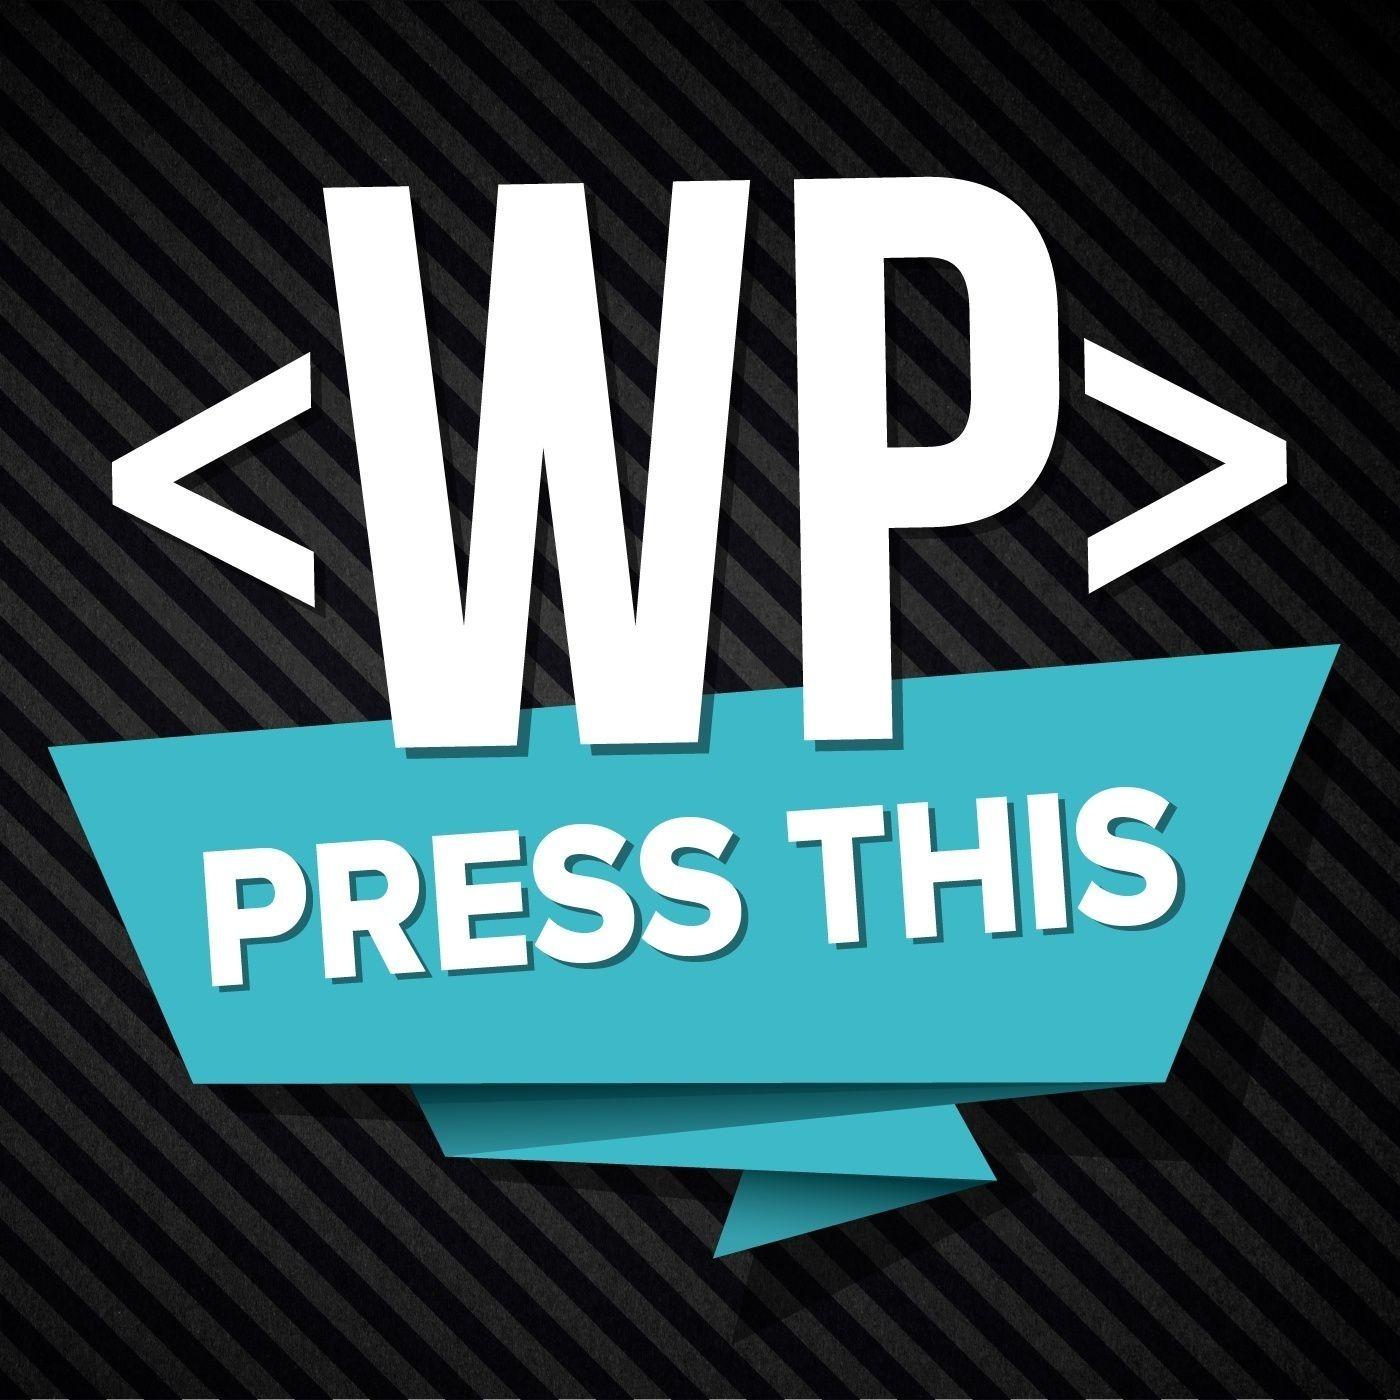 Press This WordPress Community Podcast